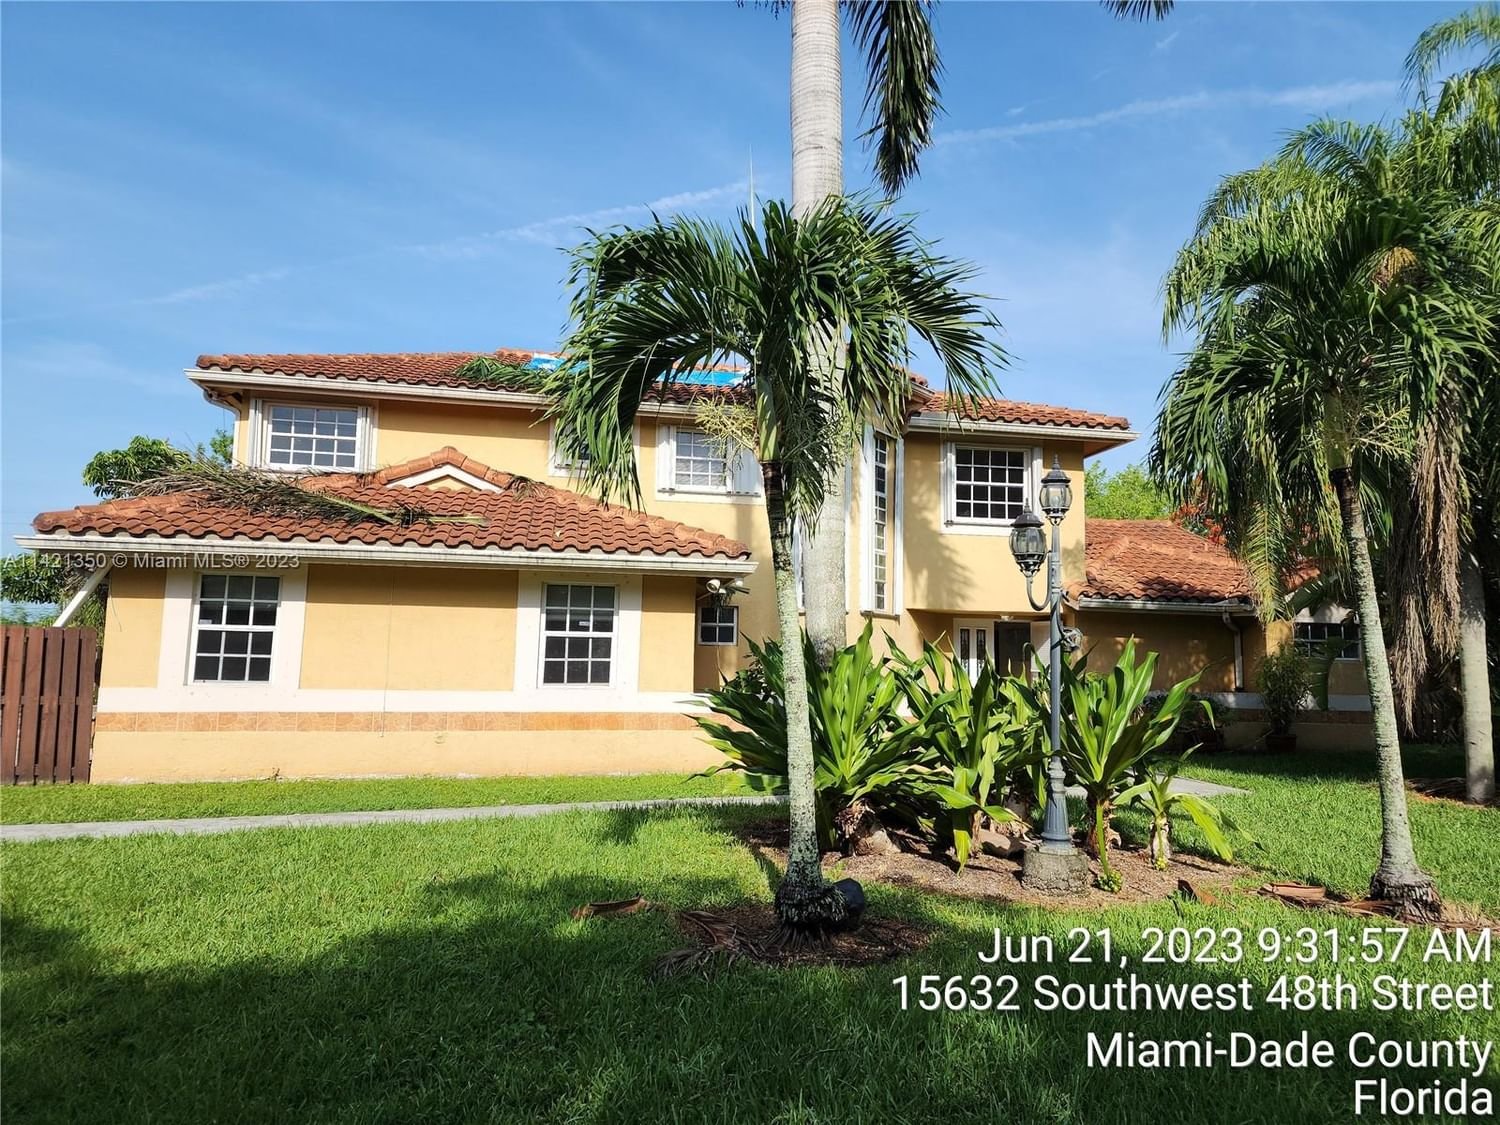 Real estate property located at 4750 156th Pl, Miami-Dade County, Miami, FL